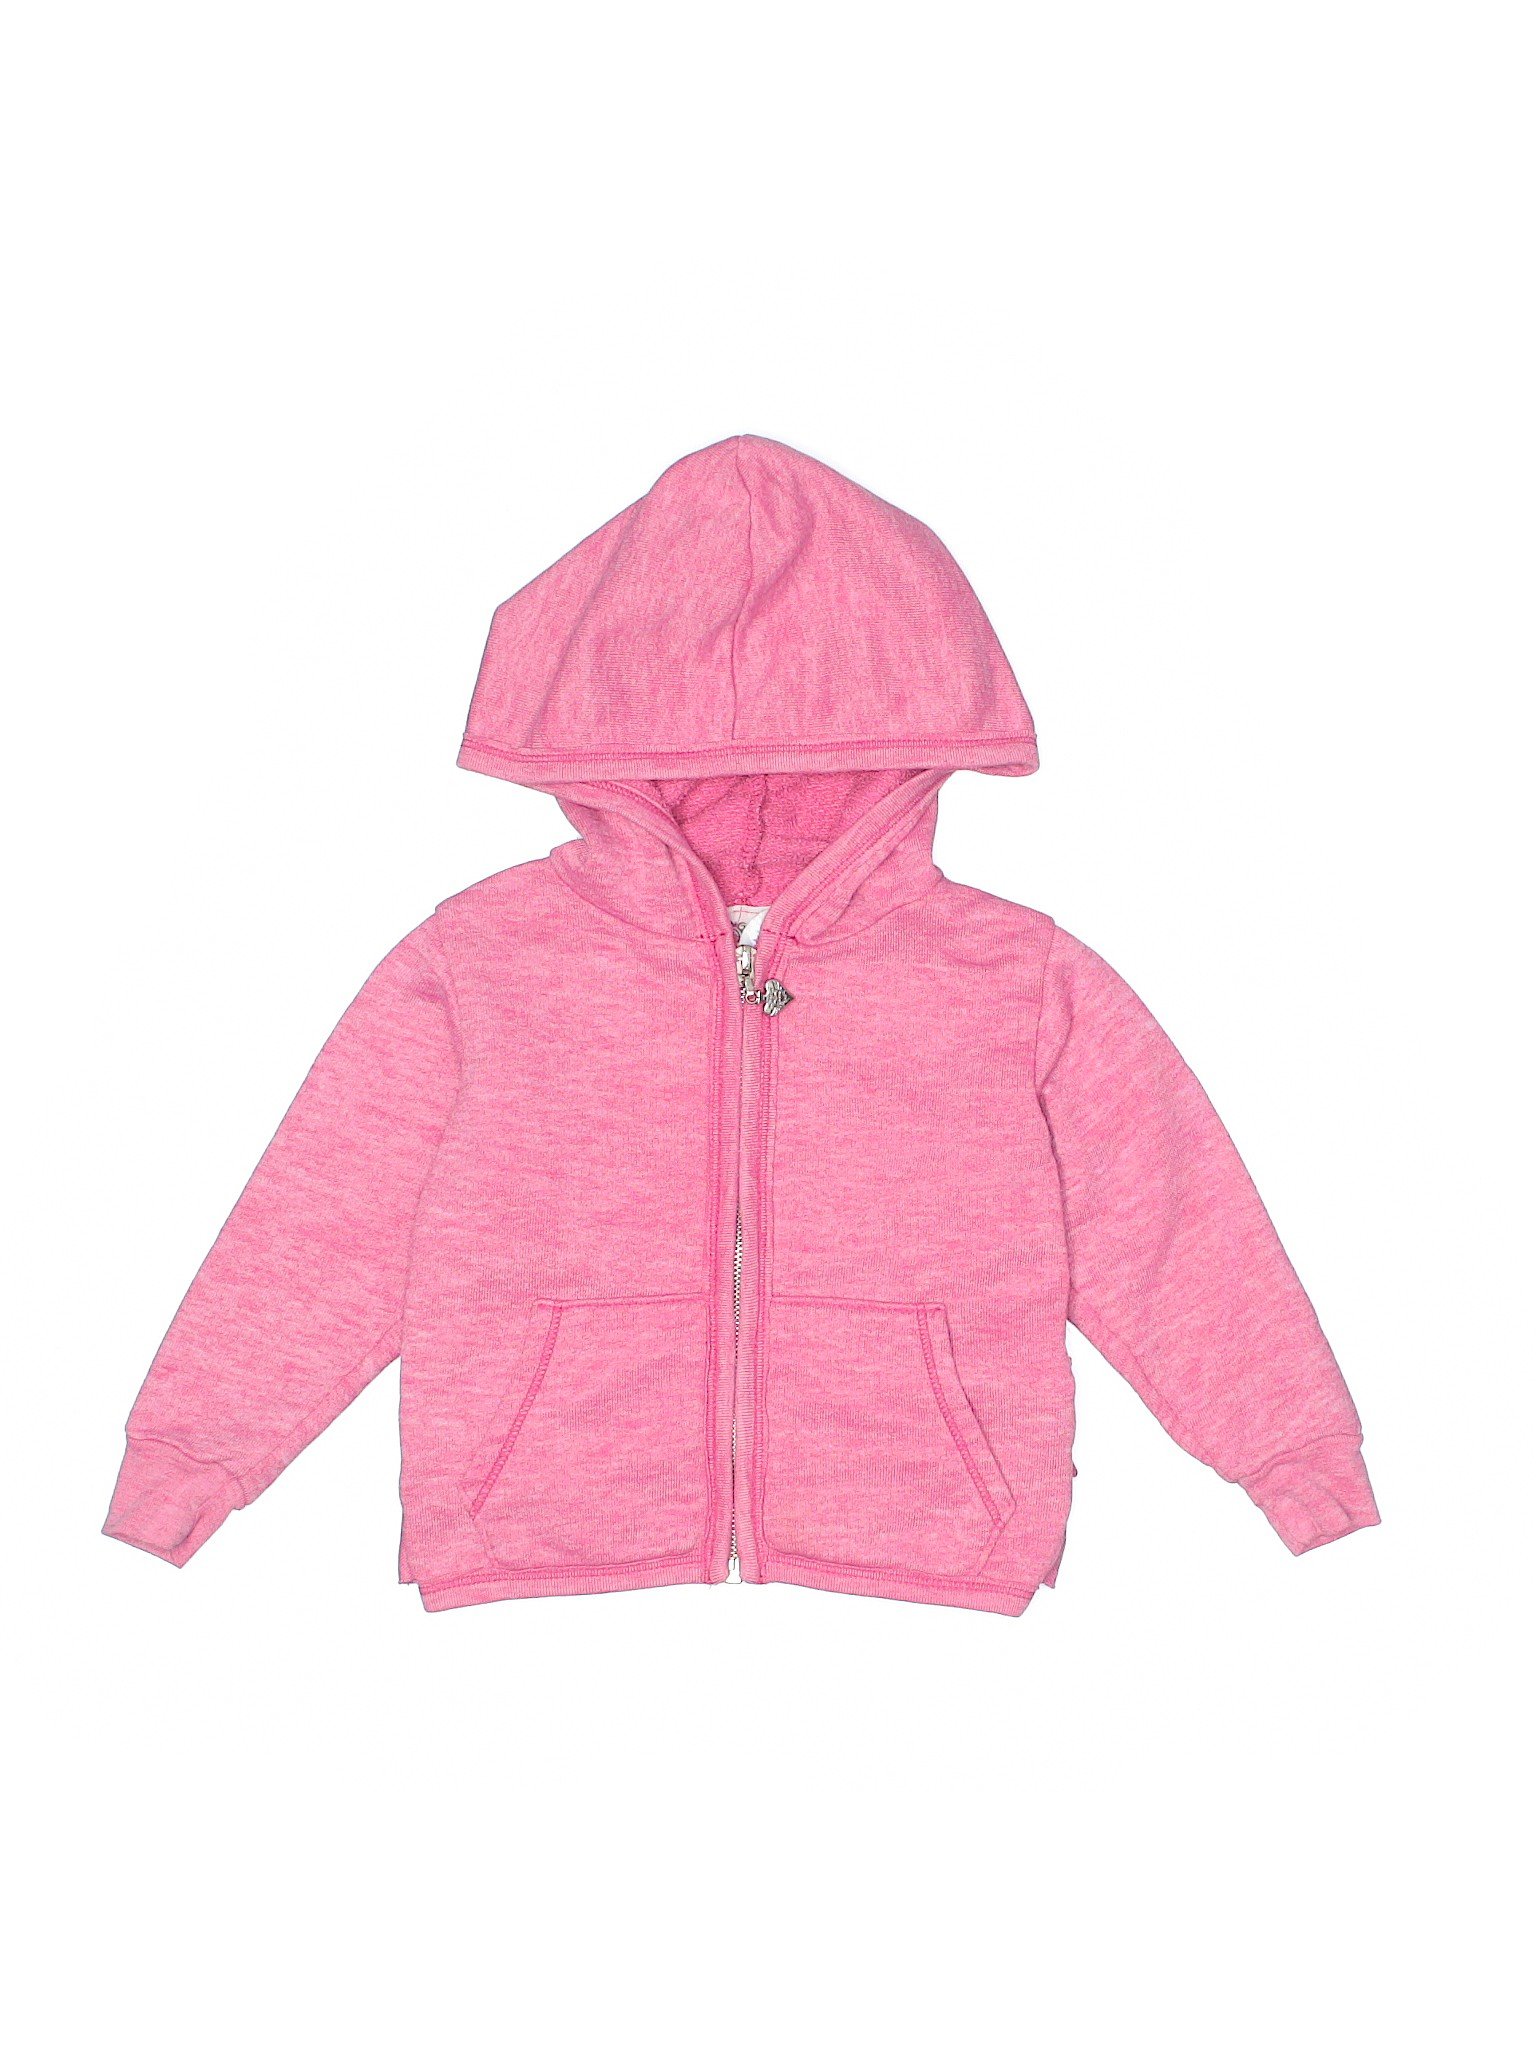 T2Love Girls Pink Zip Up Hoodie 2 | eBay